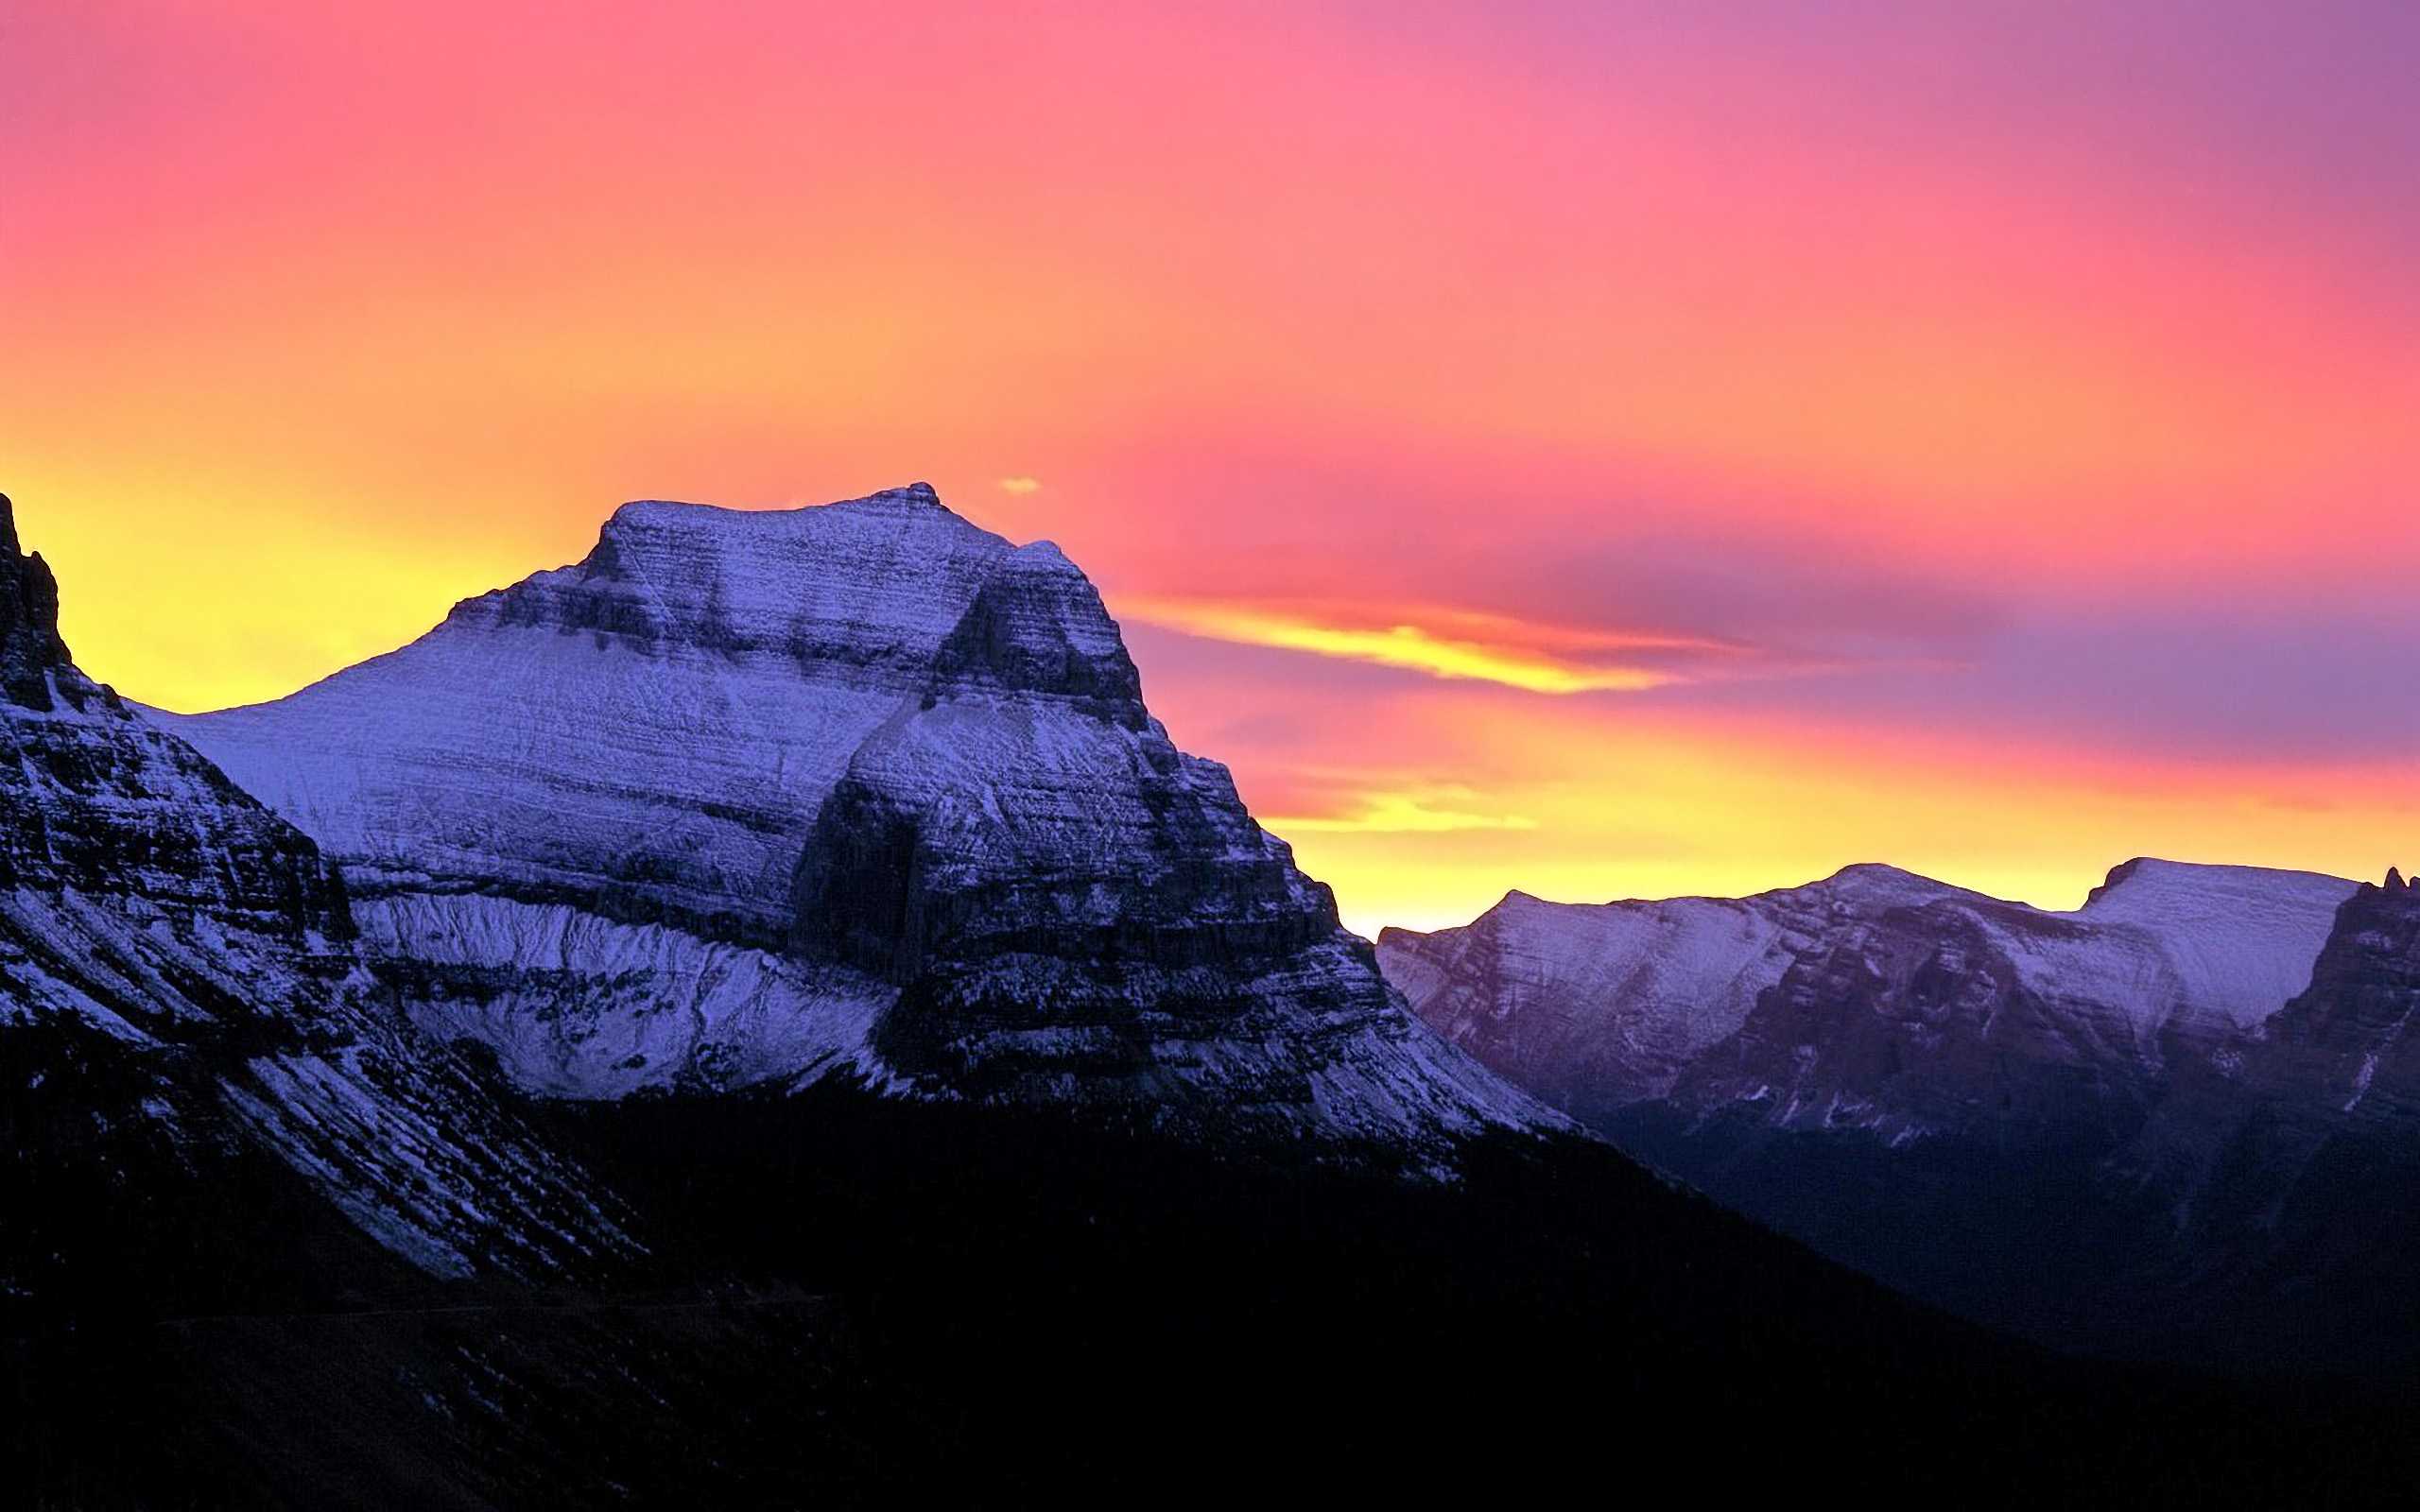 Snowy Mountain With A Sun Set - HD Wallpaper 